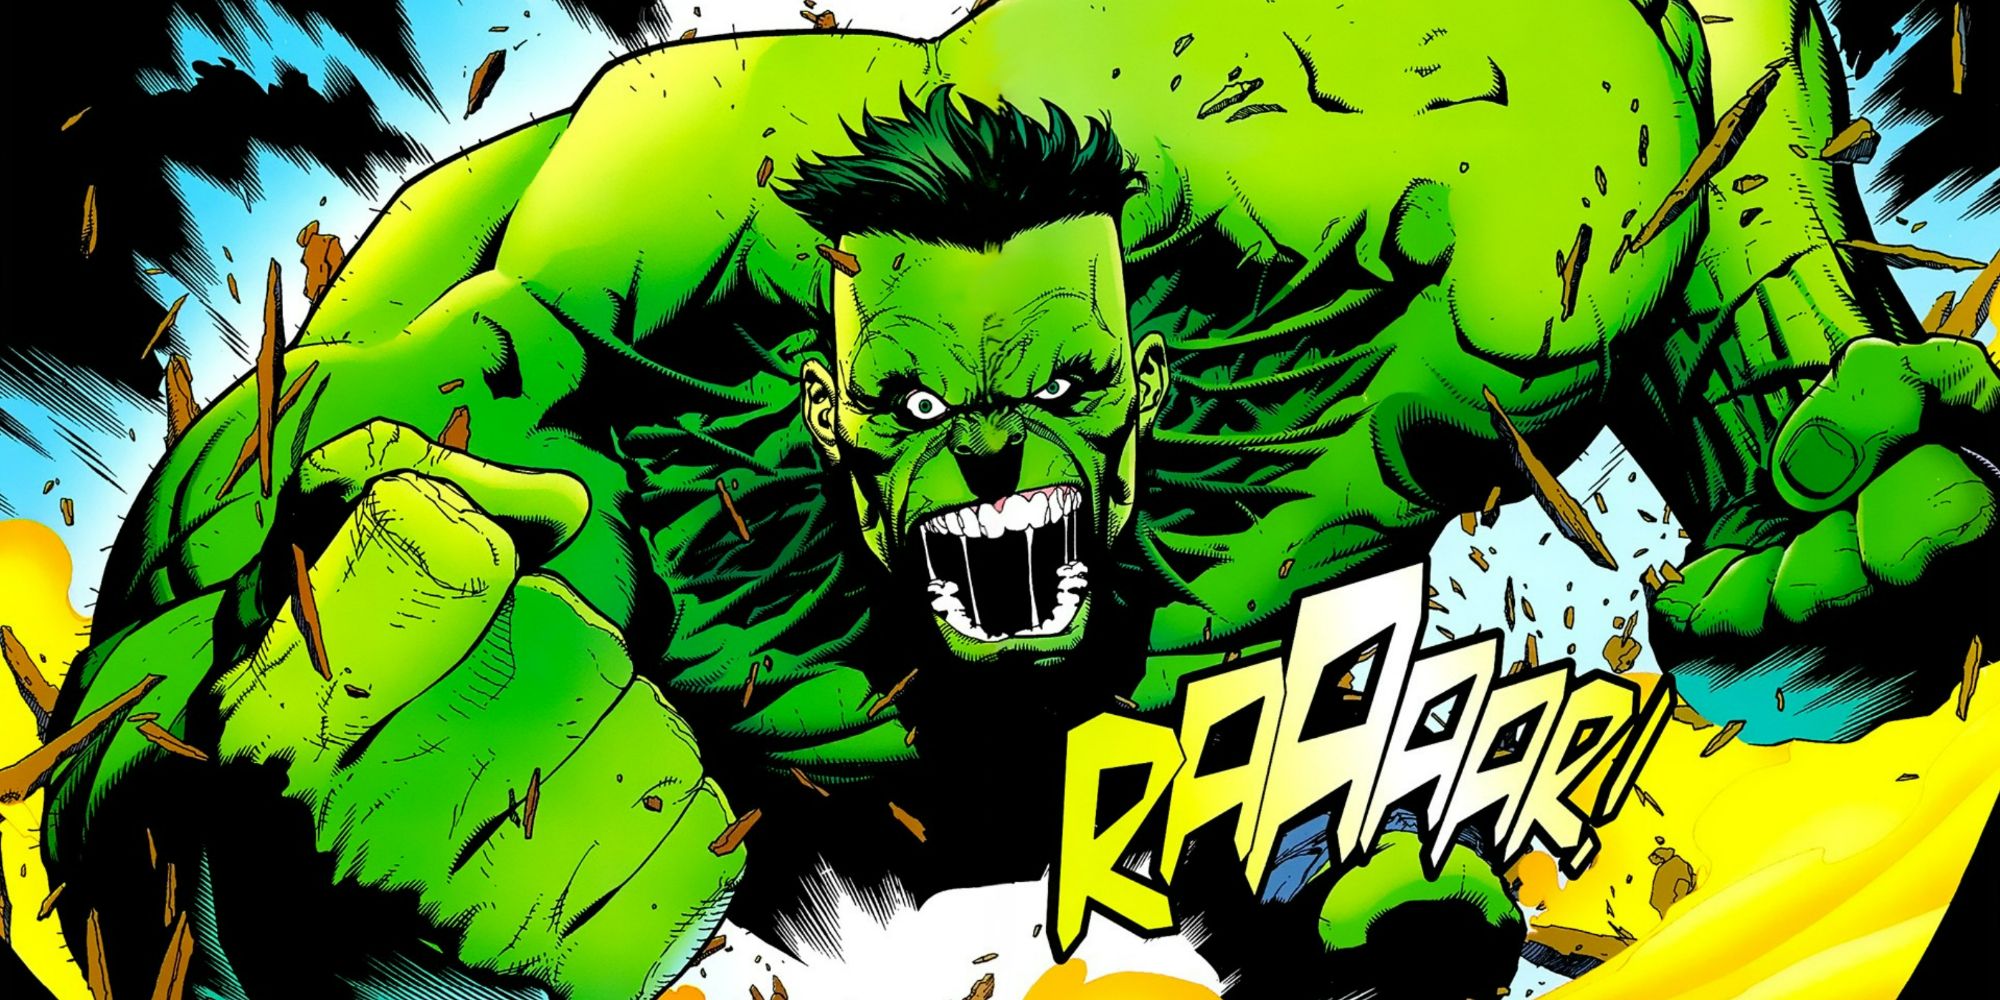 Hulk raging in Marvel Comics